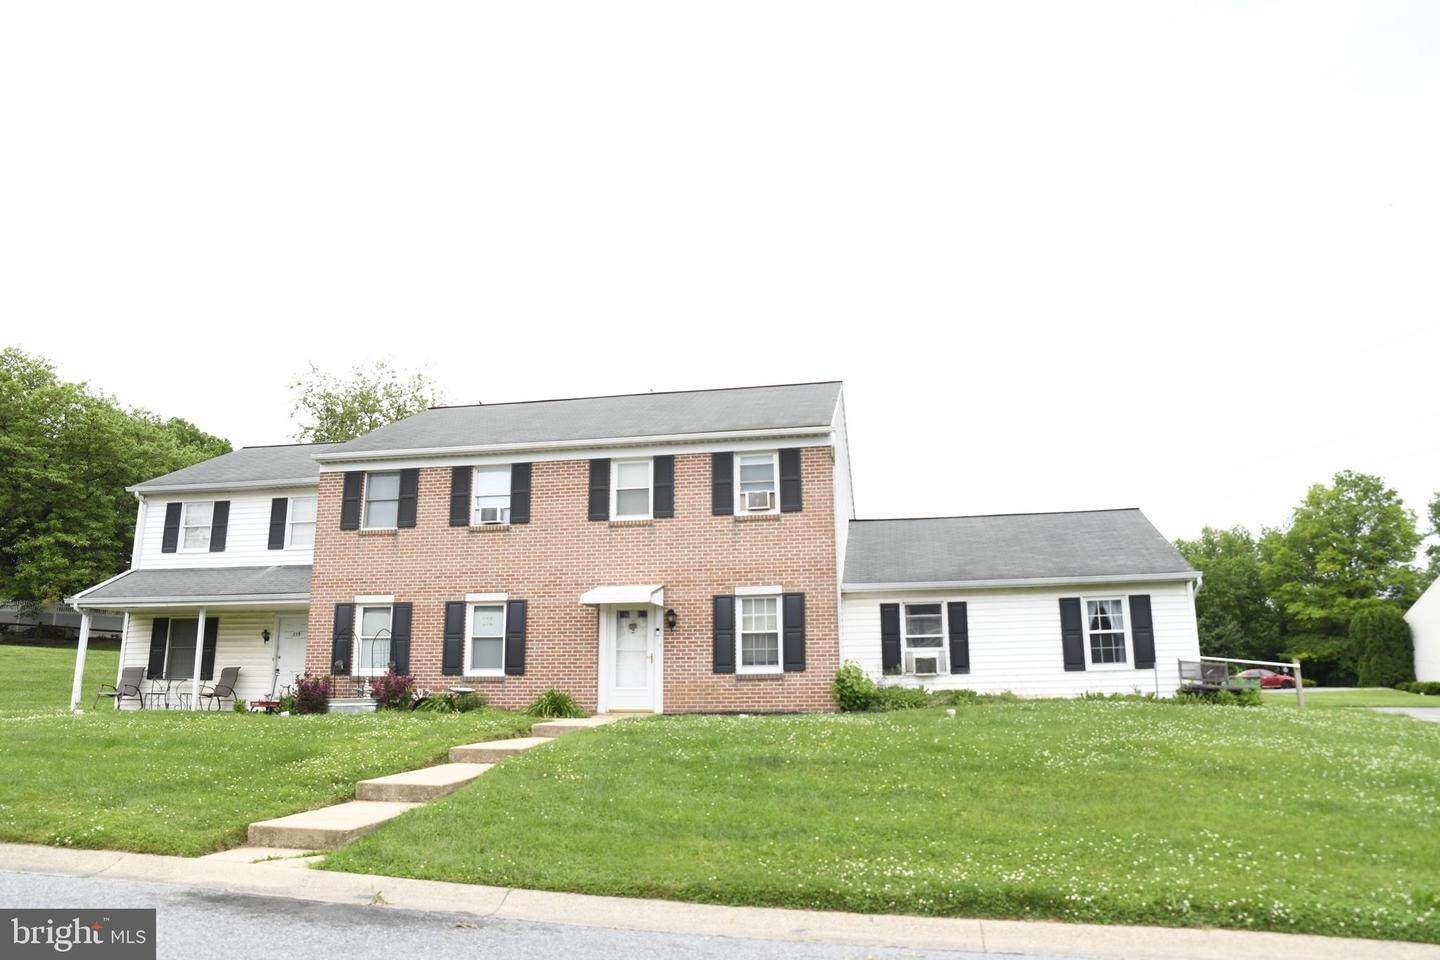 1. Residential Lease at 333 CARDINAL LANE Leola, Pennsylvania 17540 United States